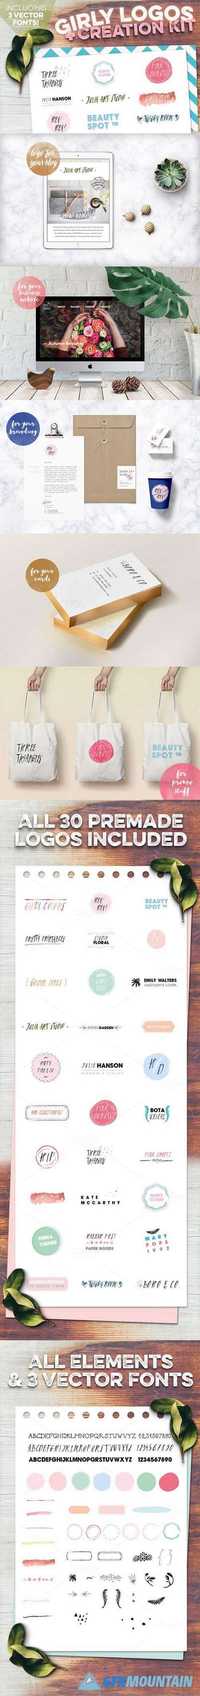 Girly Logos + Creation Kit w/ Fonts 589285